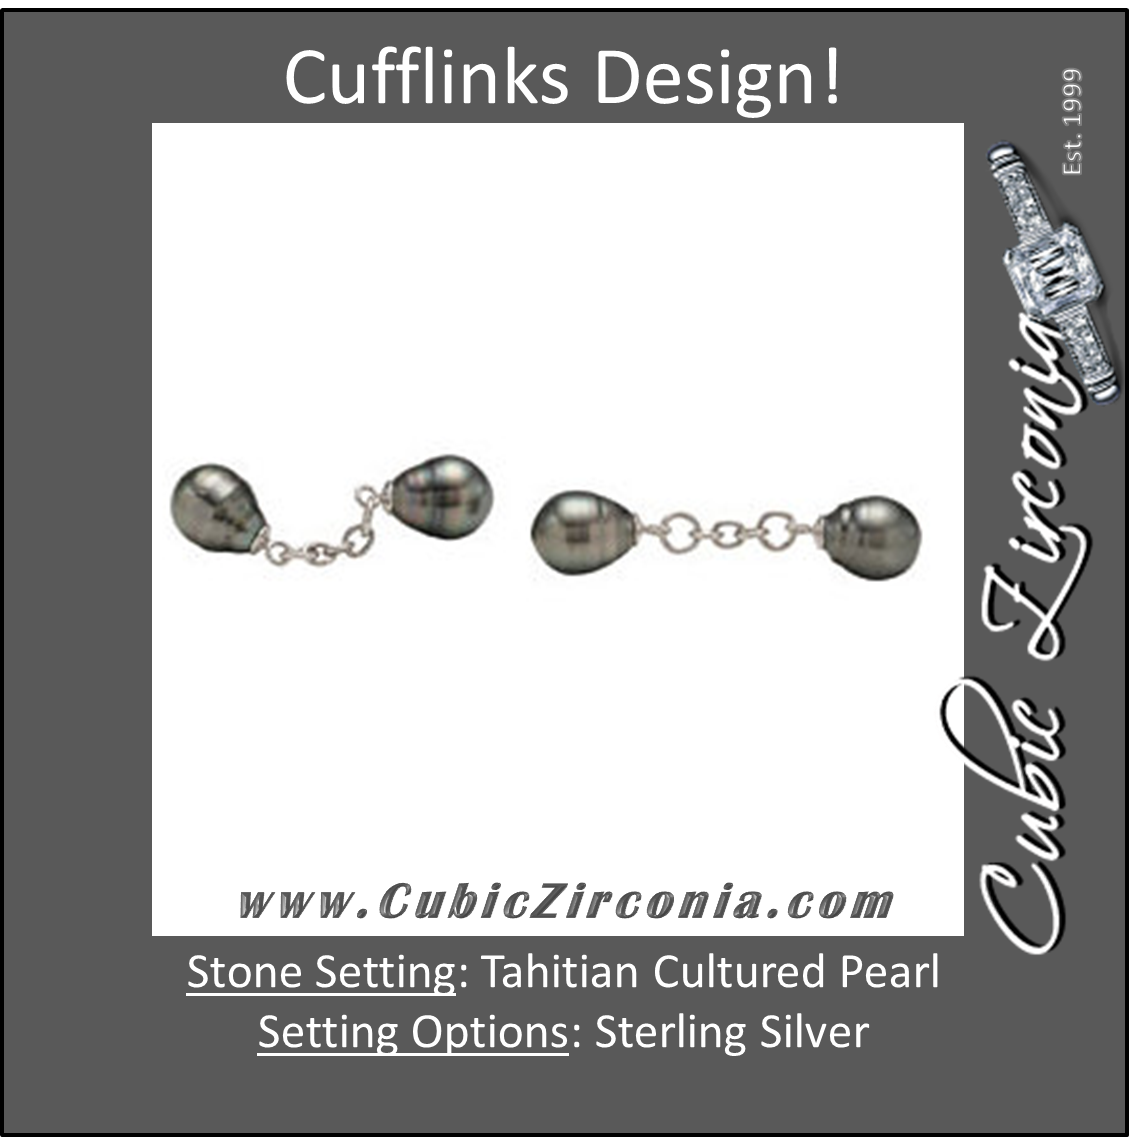 Men’s Cufflinks- Featuring 9mm Tahitian Cultured Pearls